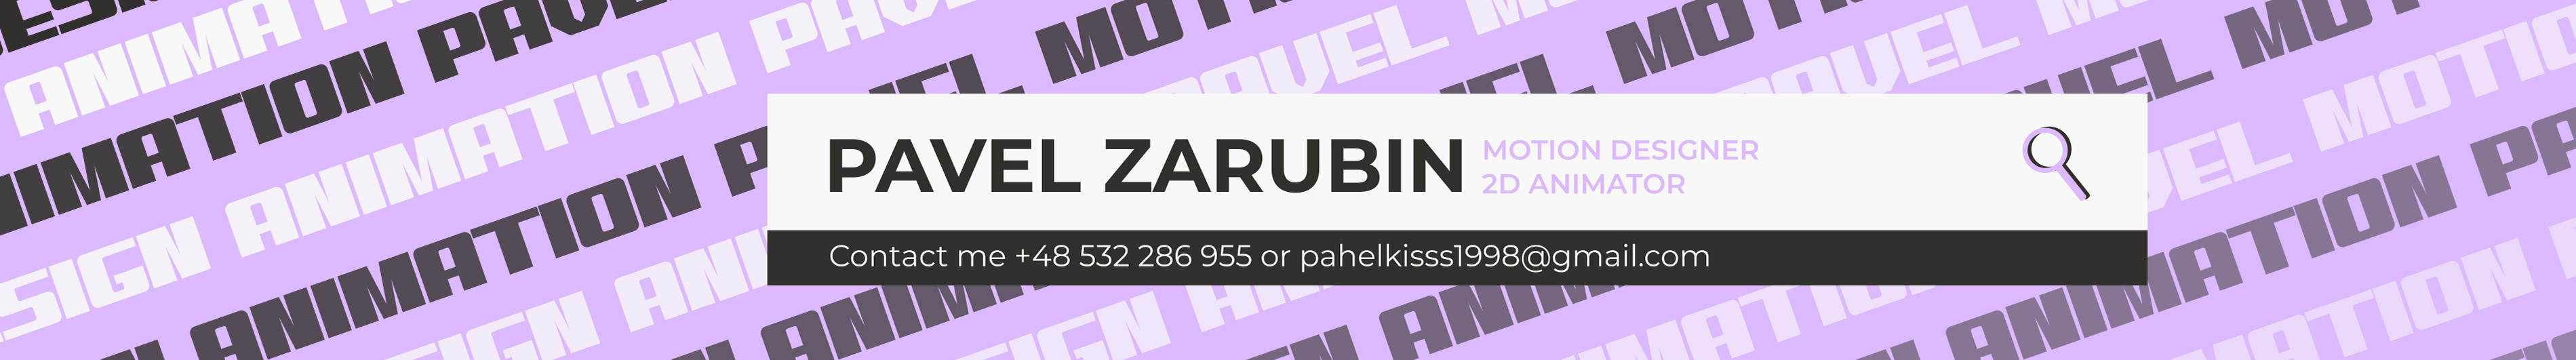 Pavel Zarubin's profile banner